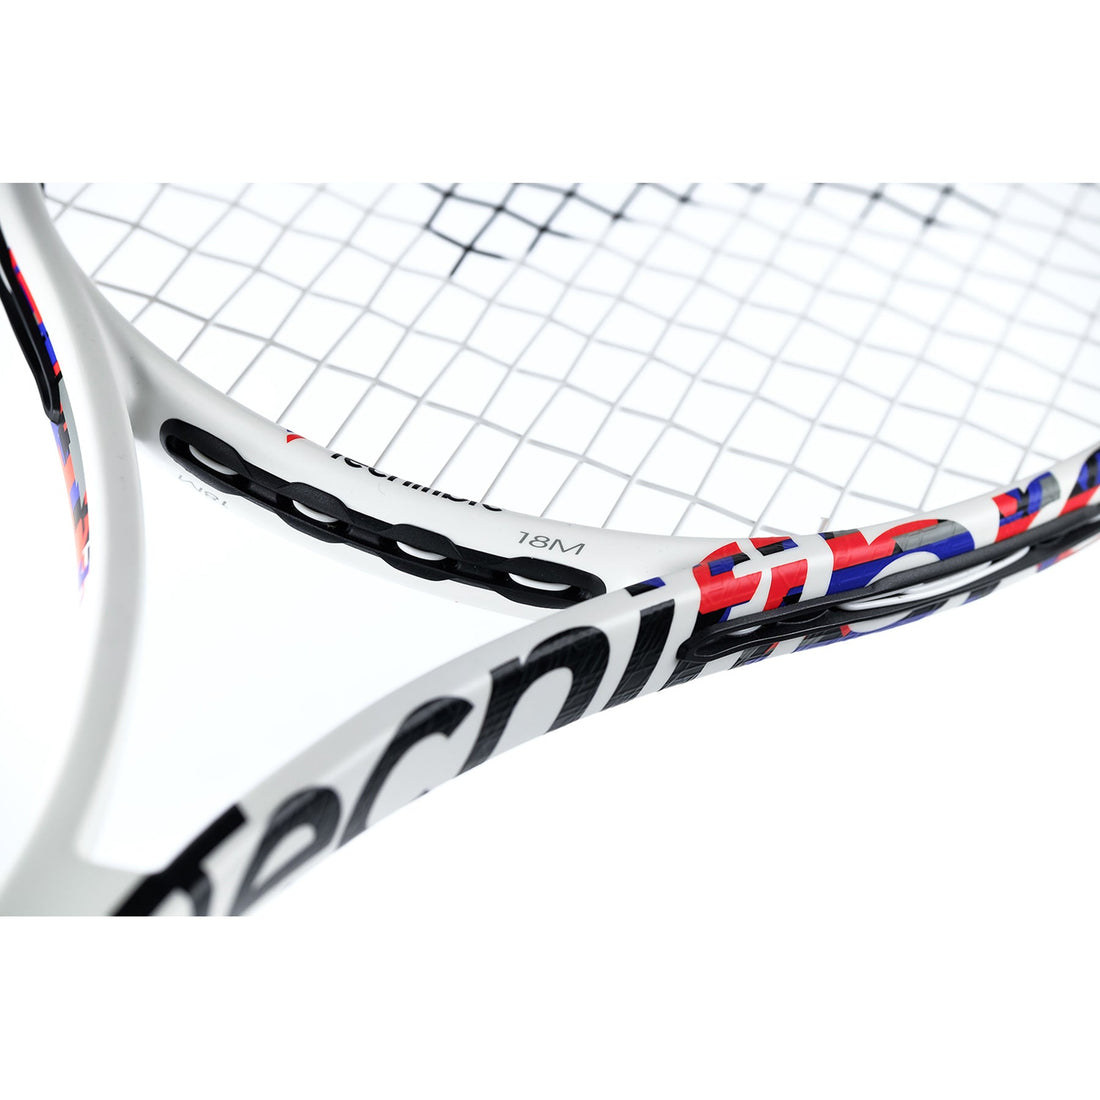 Tecnifibre TF40 305 Tennis Racket showcasing its unique RS Sharp Section geometry